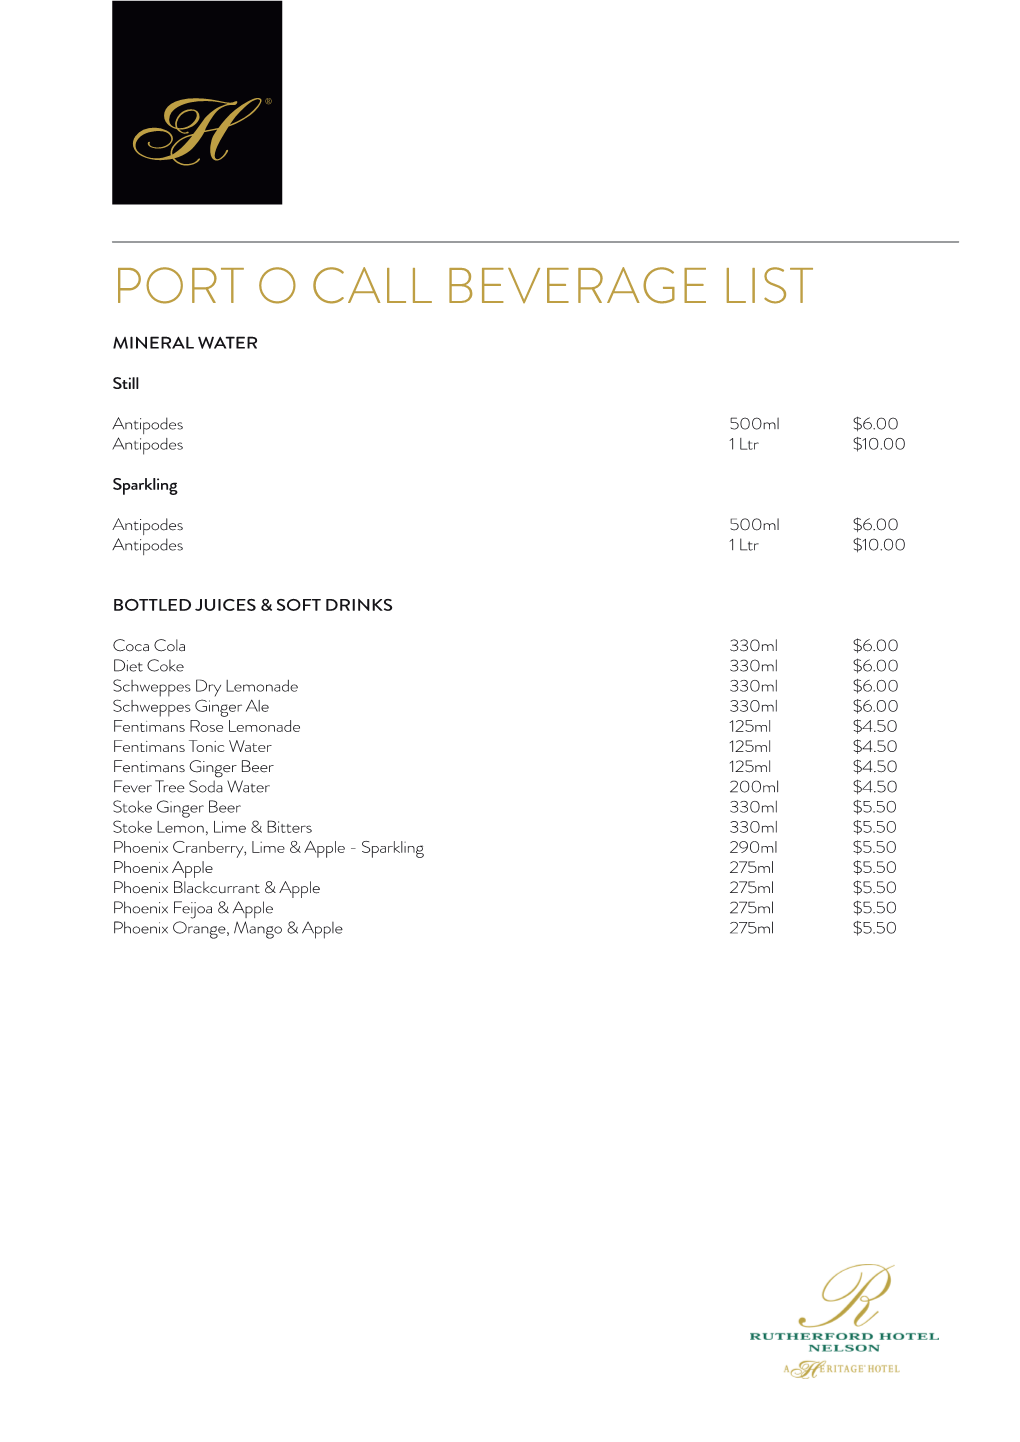 Port O Call Beverage List